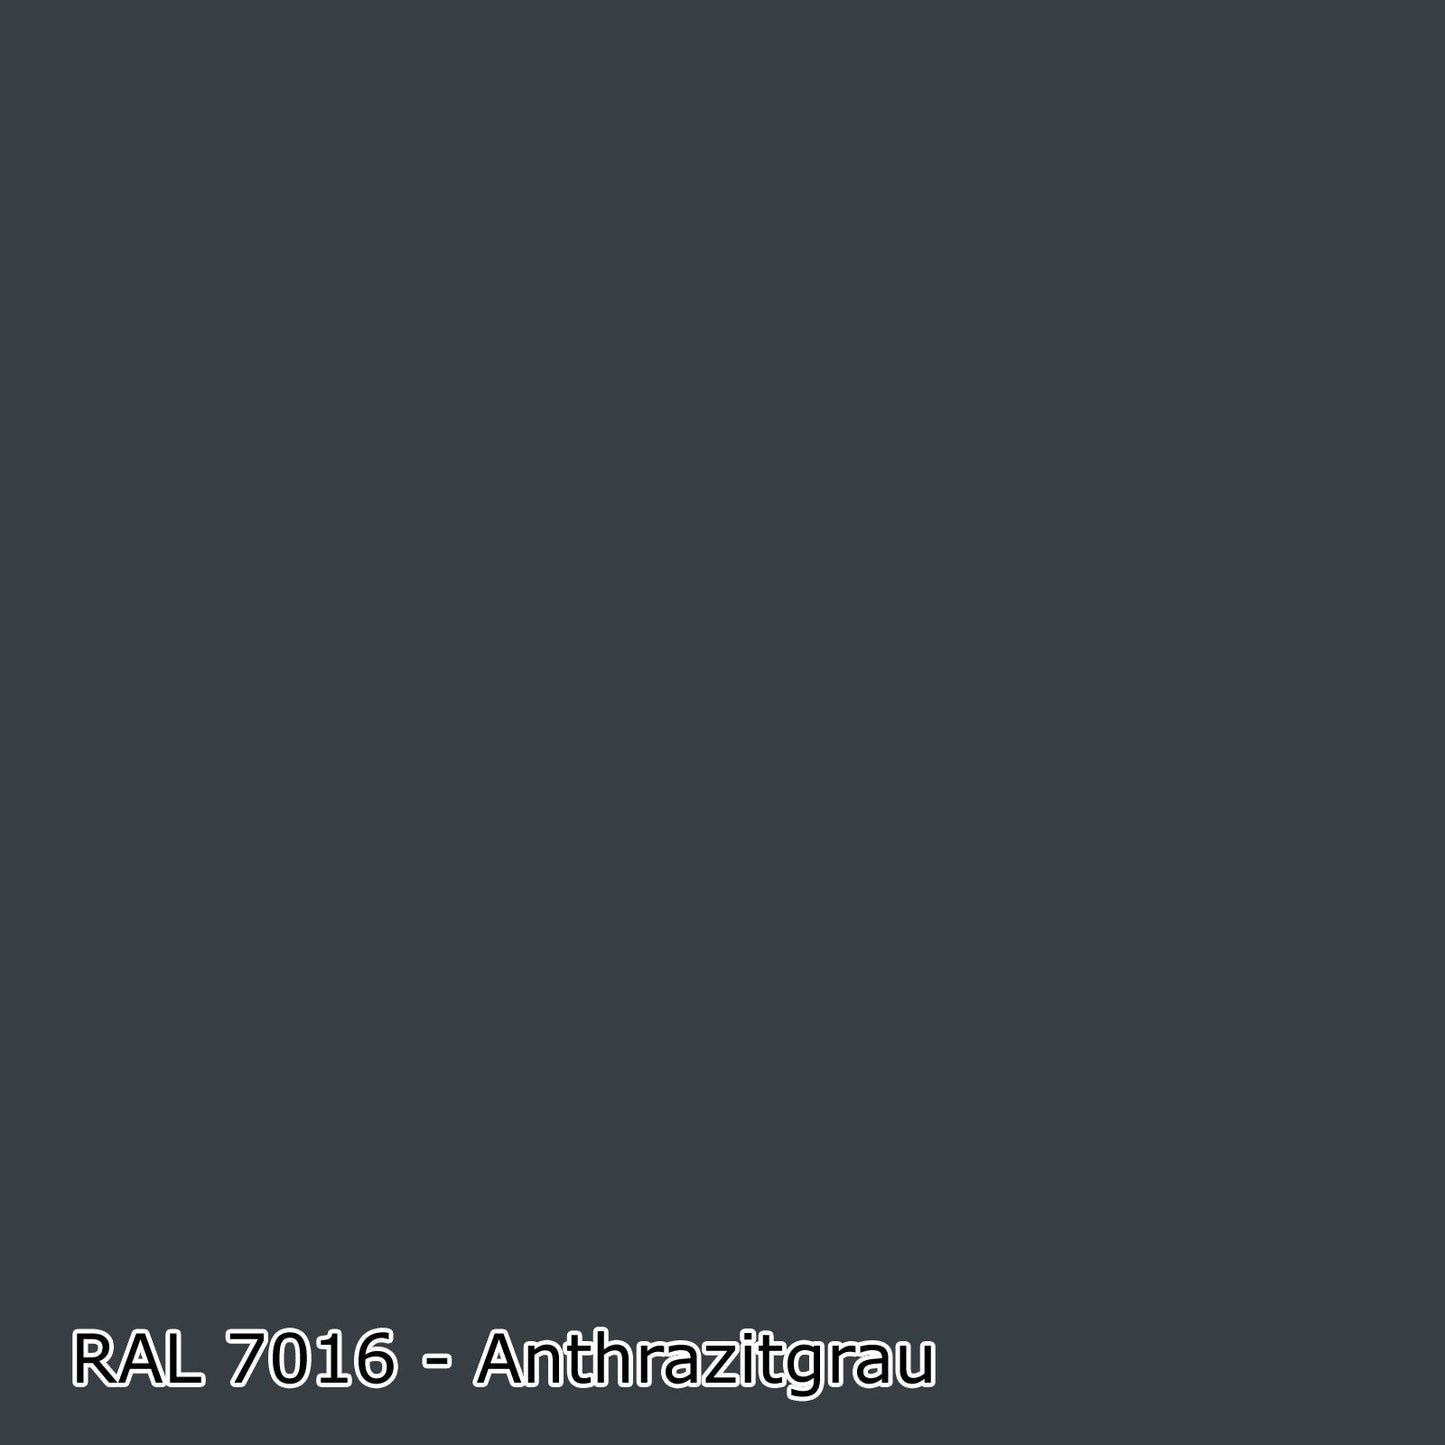 1 L Acryl Buntlack, Acryllack, RAL Farbwahl - SEIDENMATT (RAL 6008 - 9018)